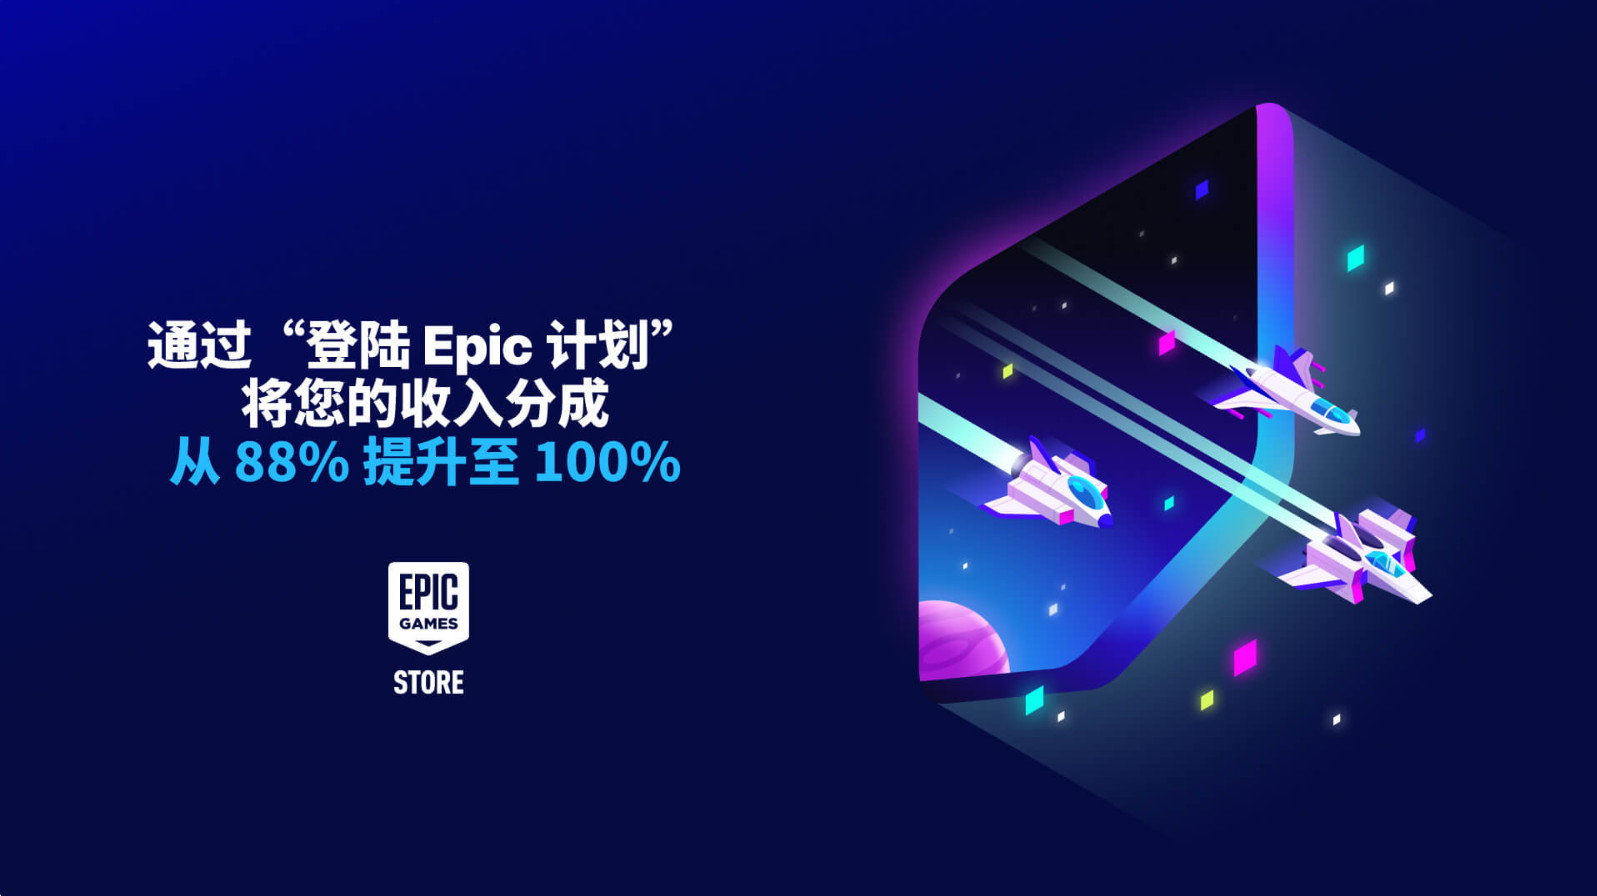 Epic又推新政策“Epic始发”：携老游戏回归 前六个月获100%支出分成